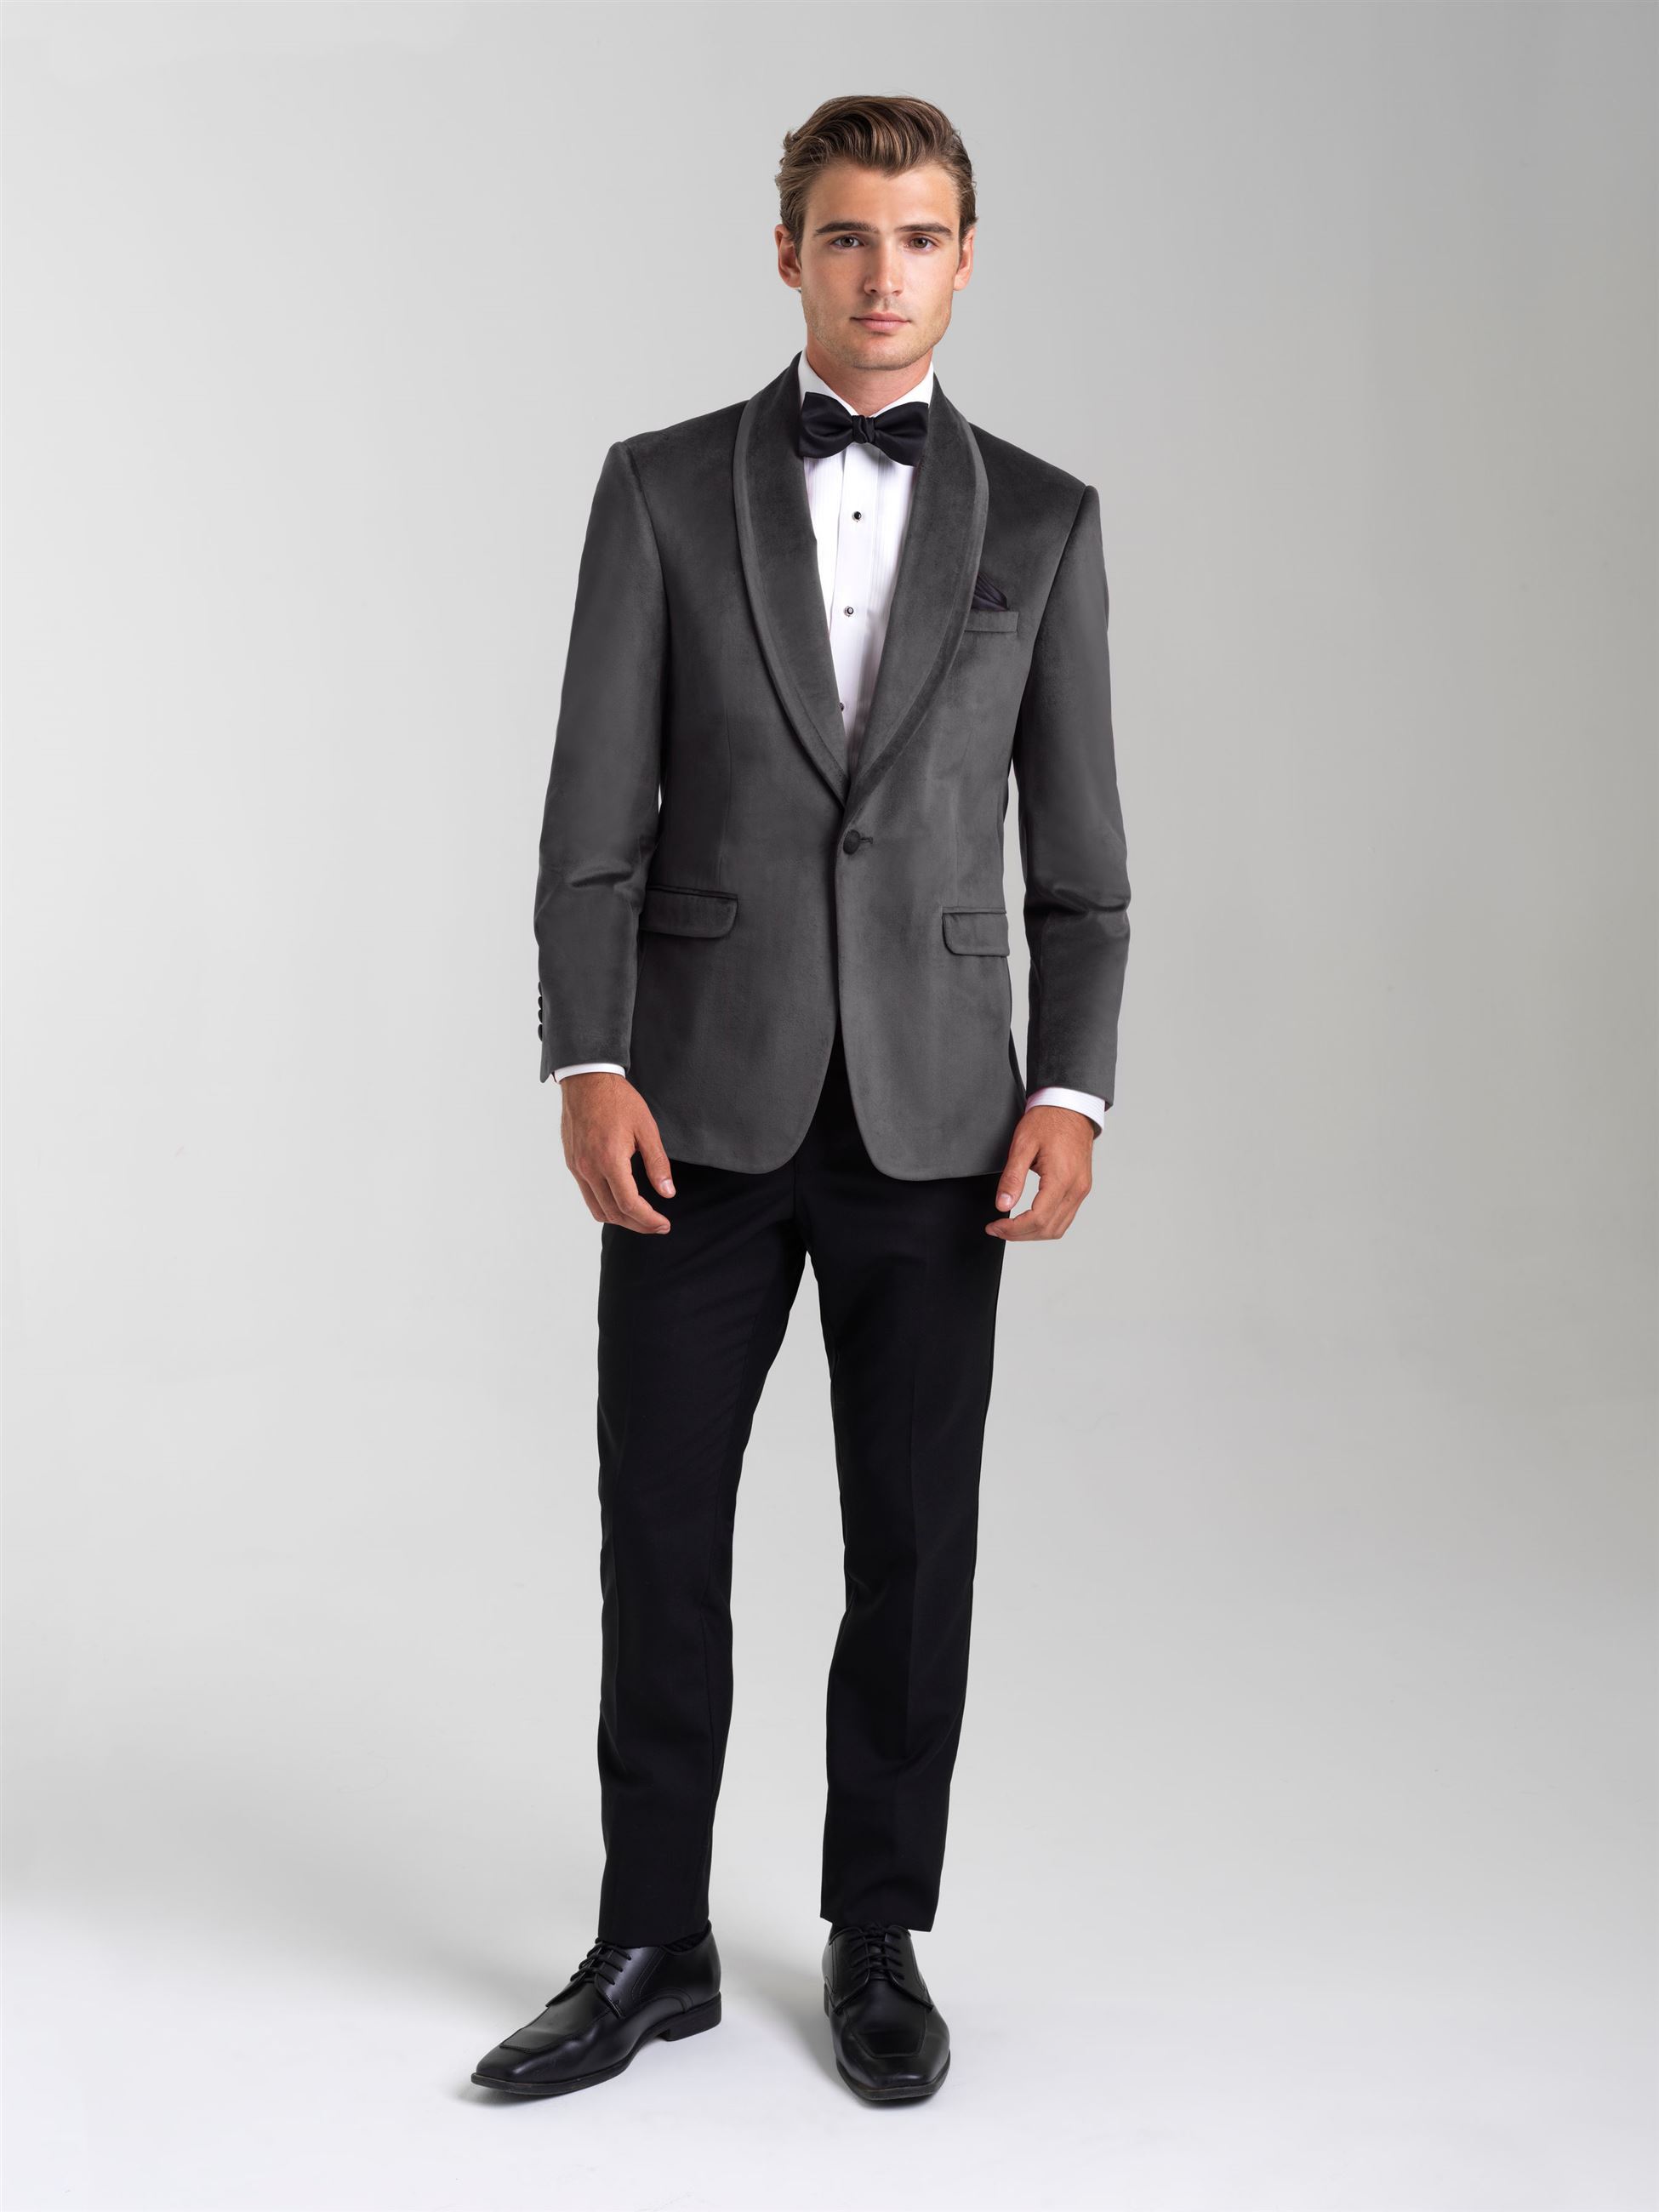 Men's Suits & Tuxedos- Lansing, MI | Fantastic Finds